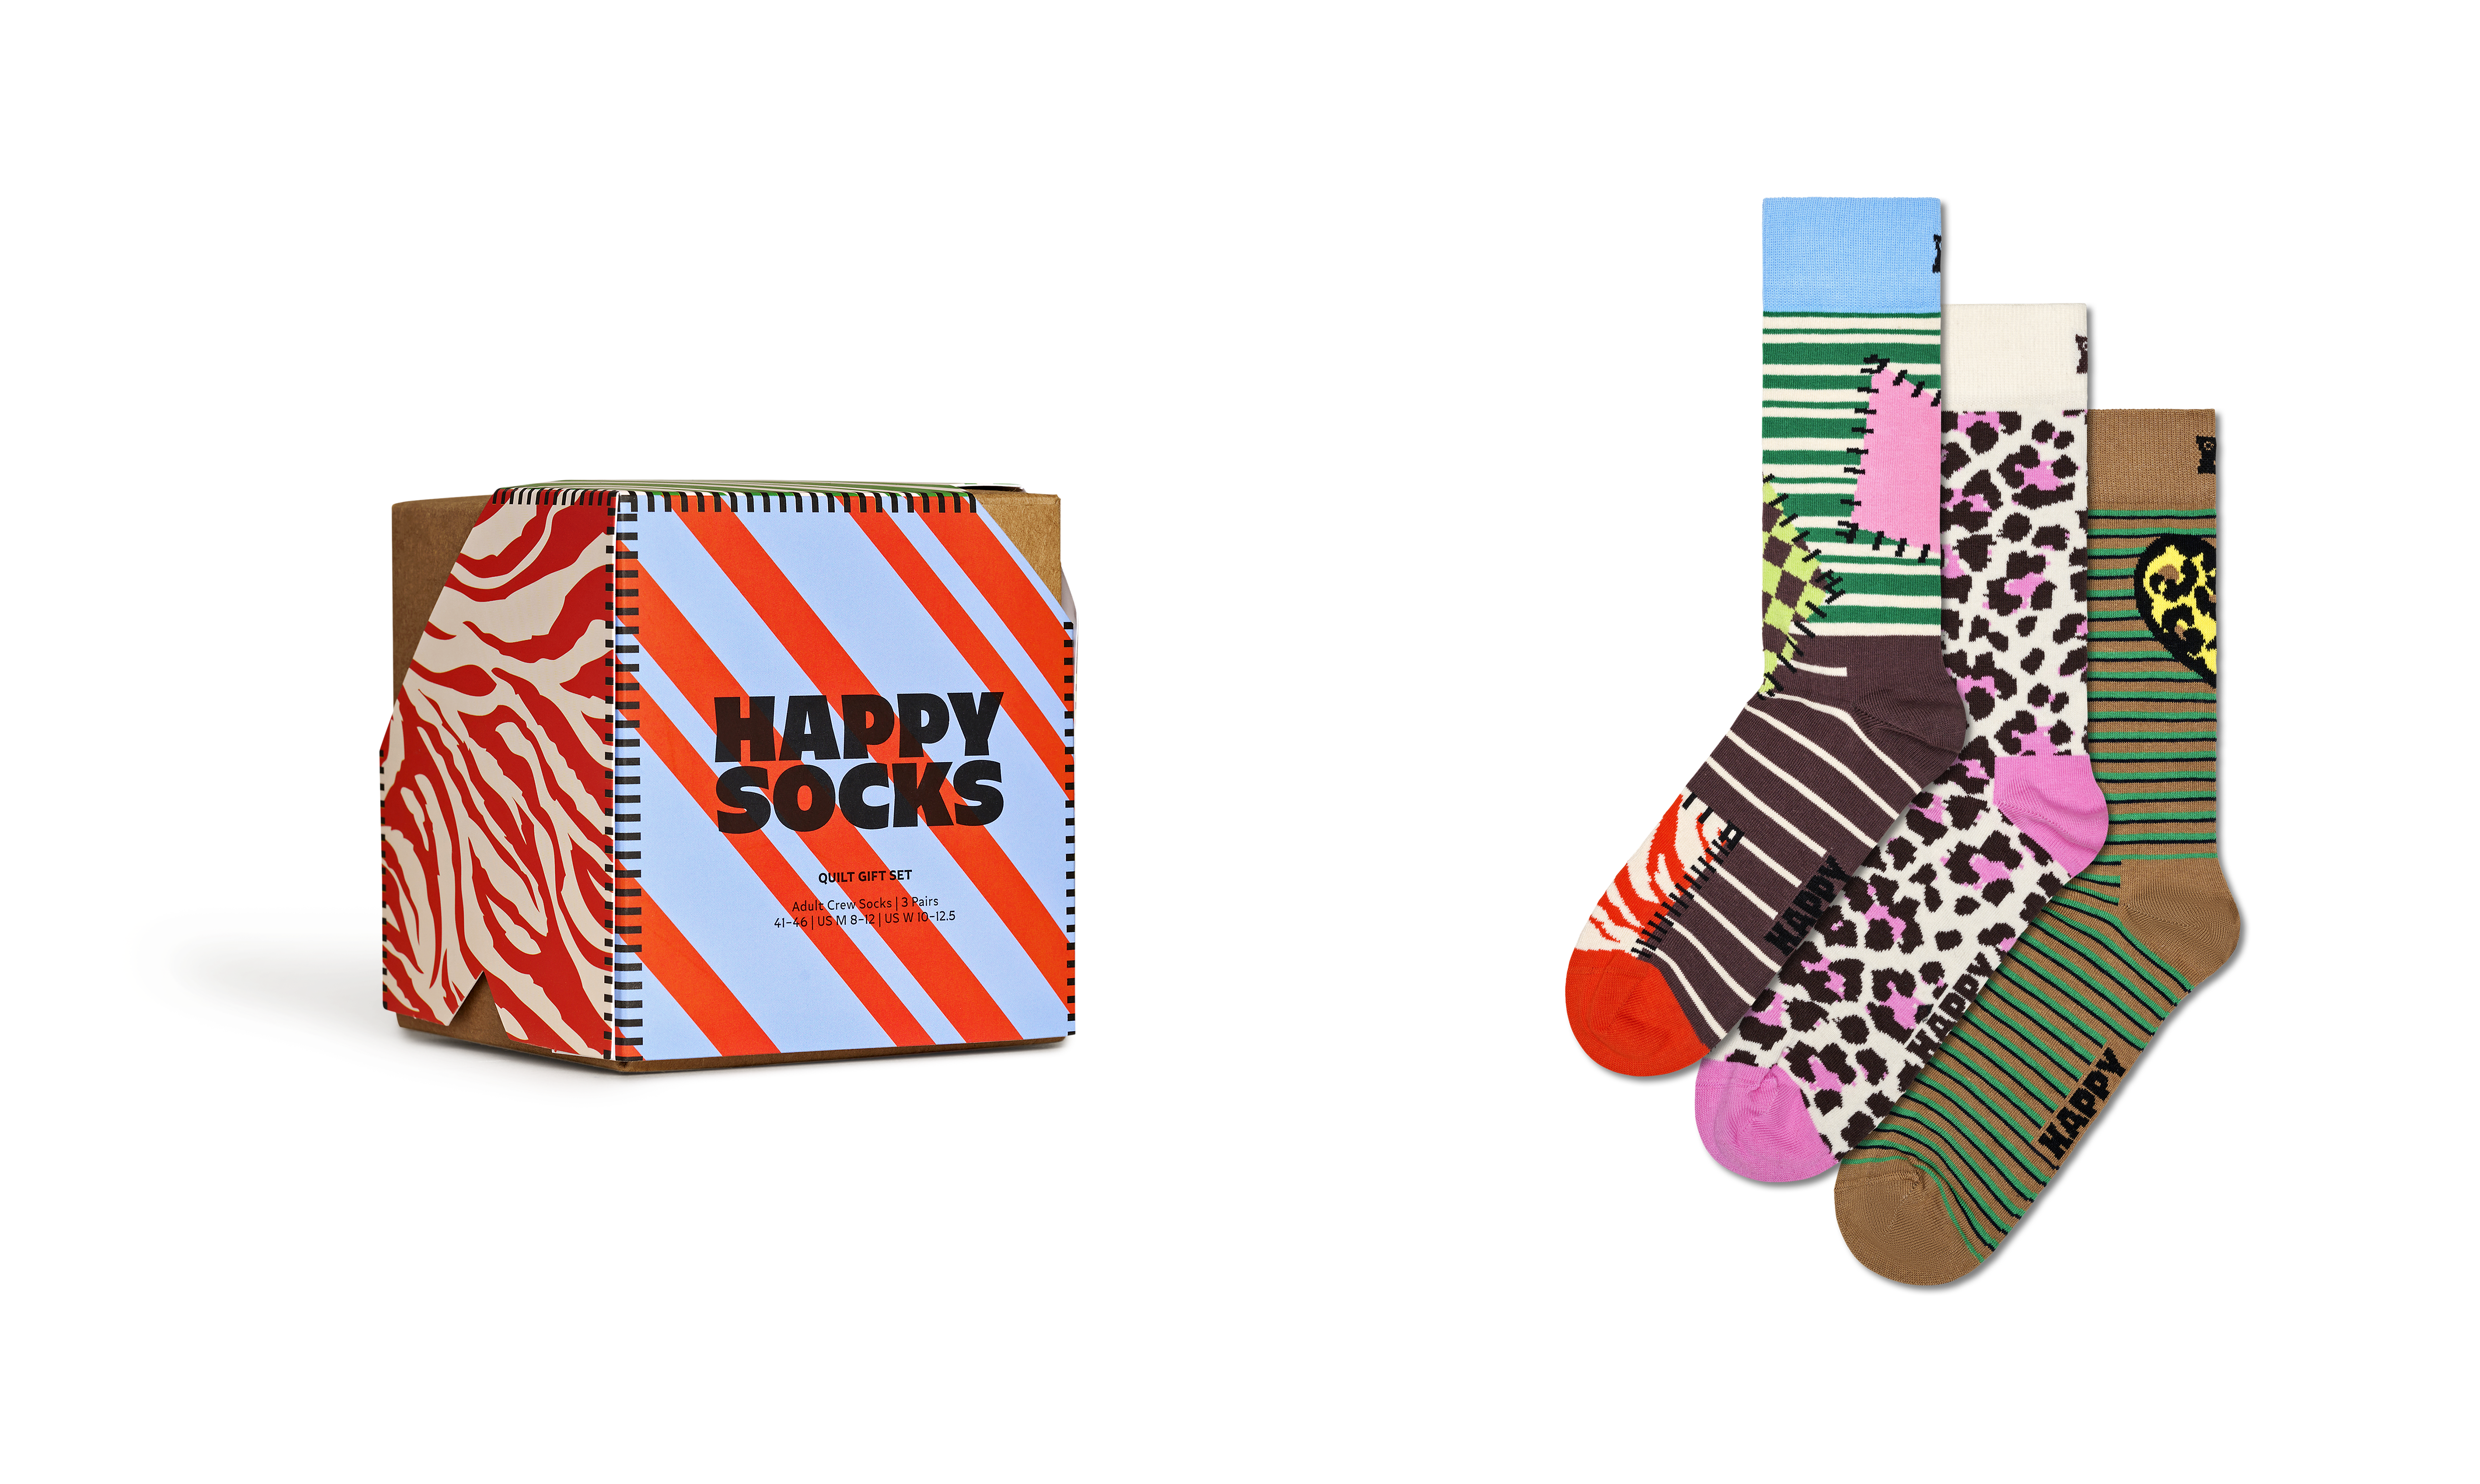 Kids Cooking 3-Pack Happy Socks Gift Set